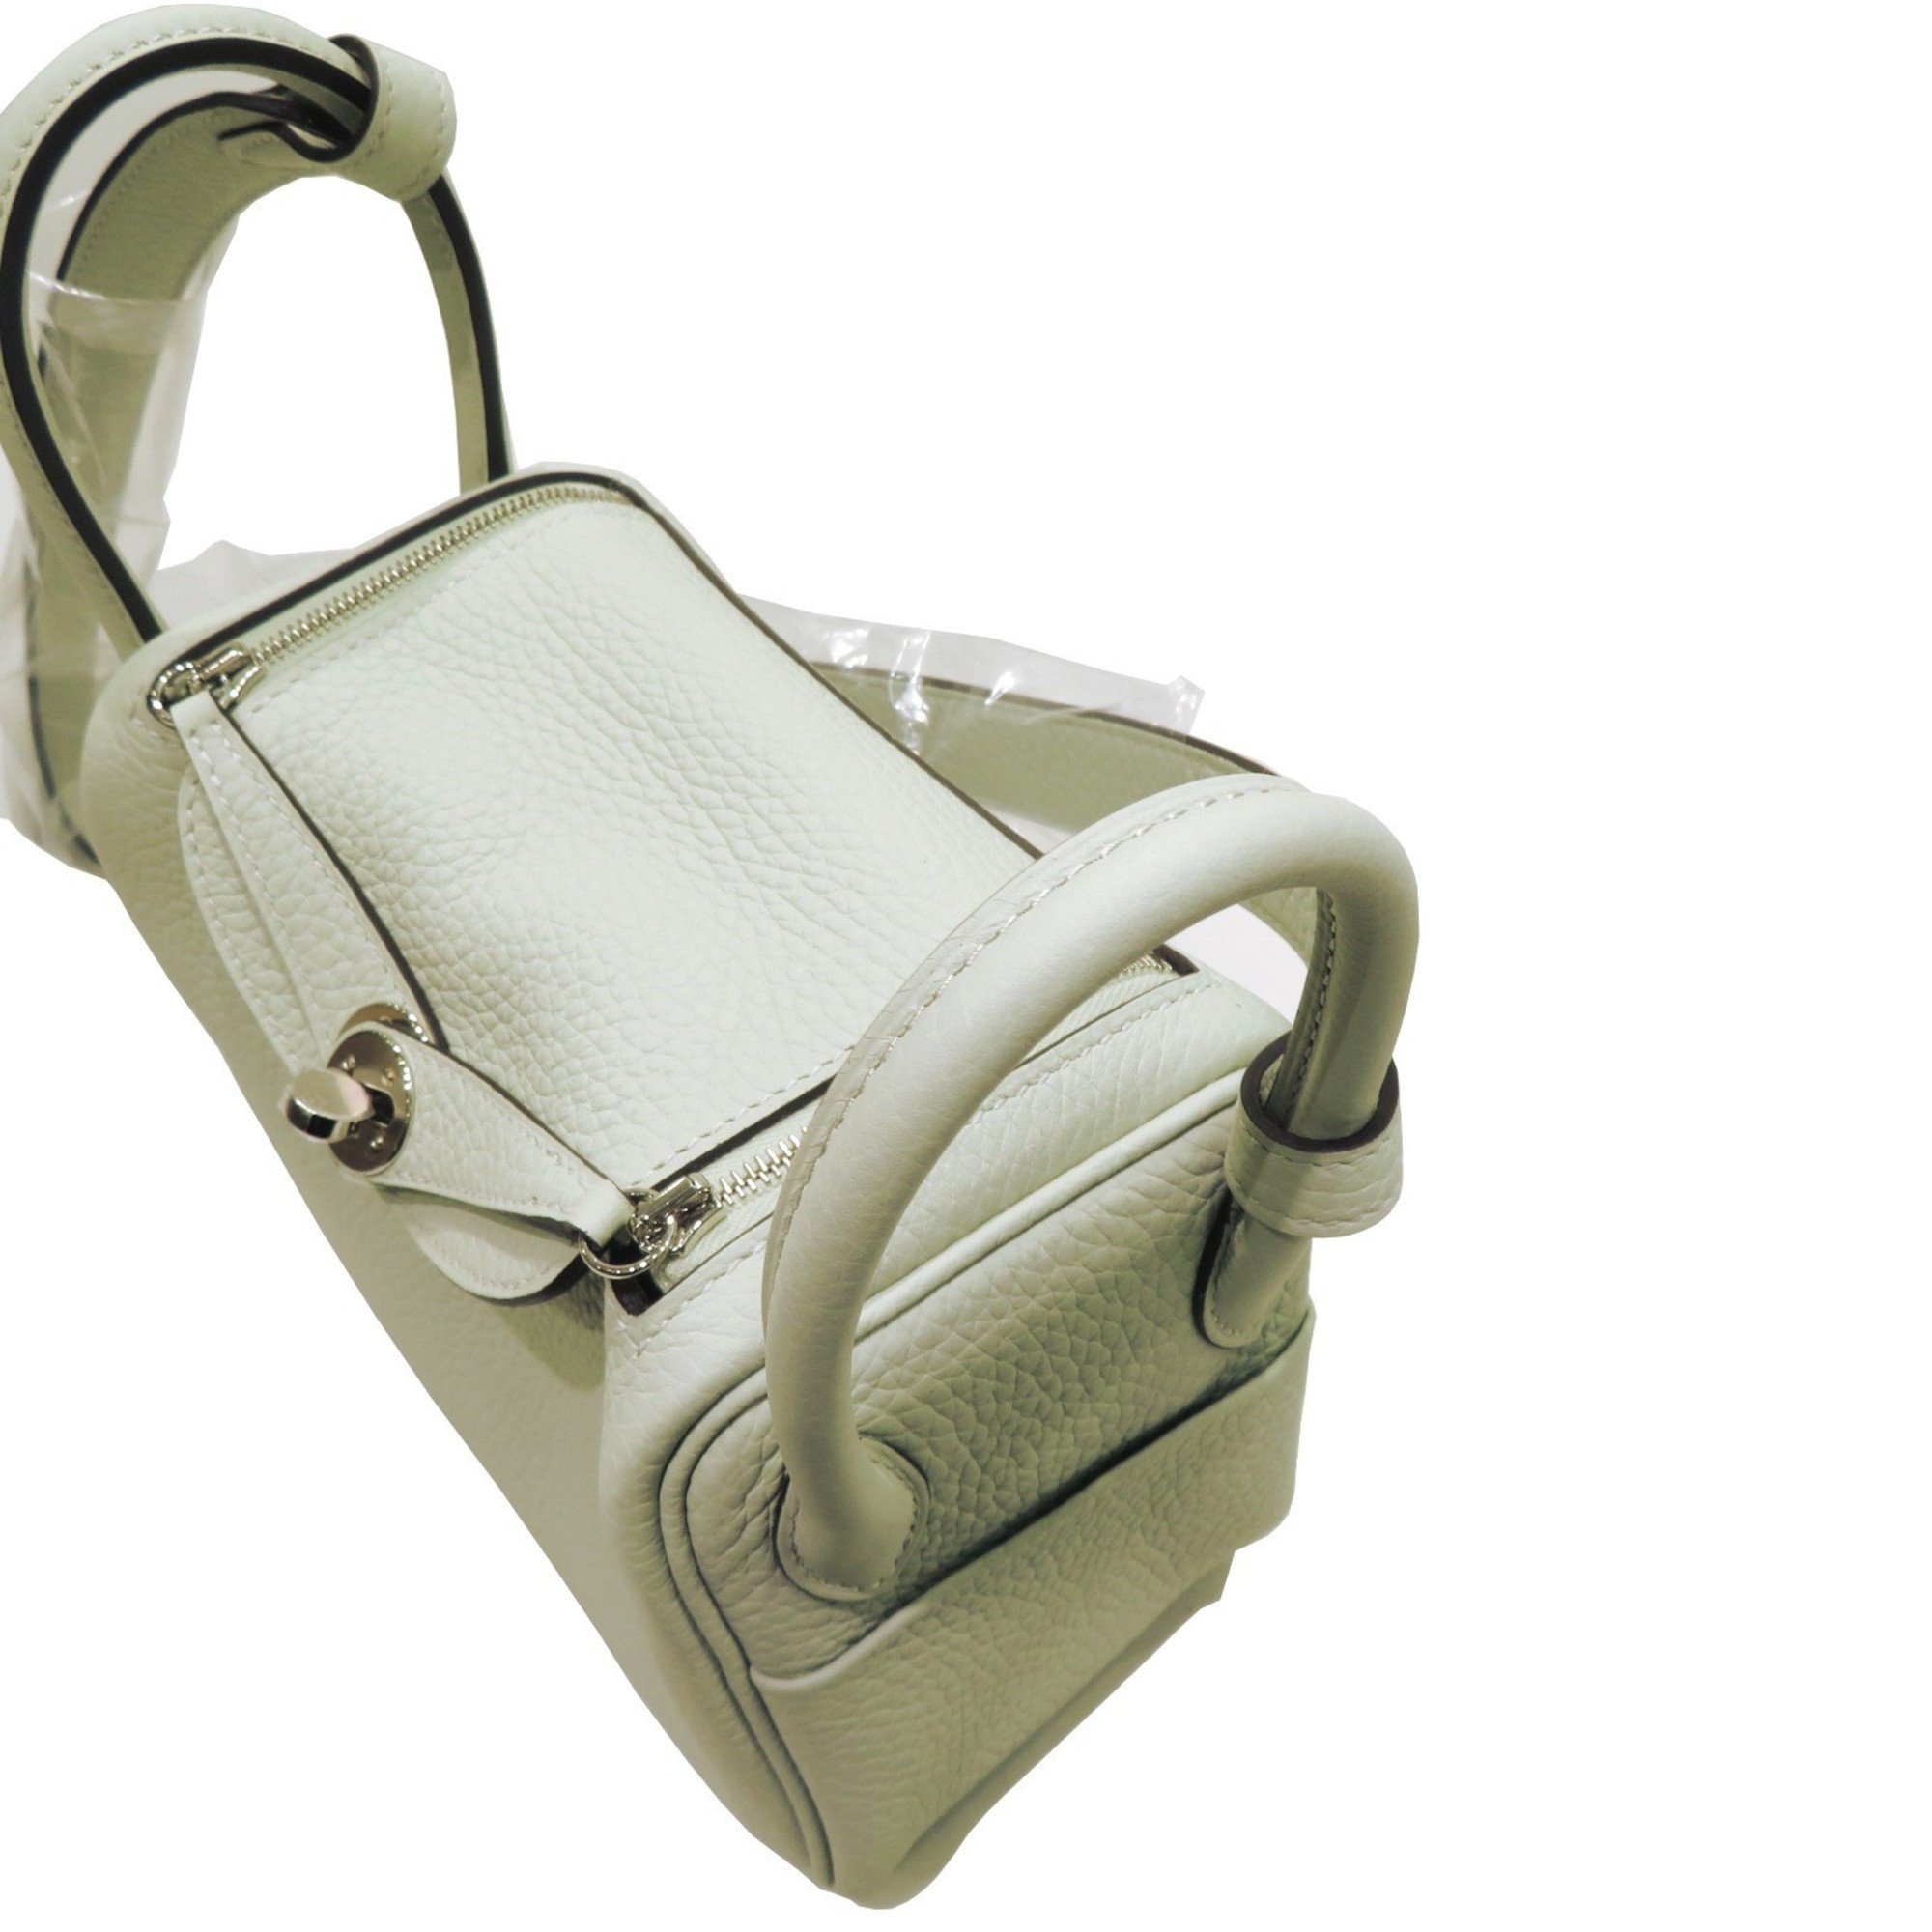 HERMES Lindy handbag, Greenevé/Silver hardware, Taurillon, B stamp, women's and men's bags